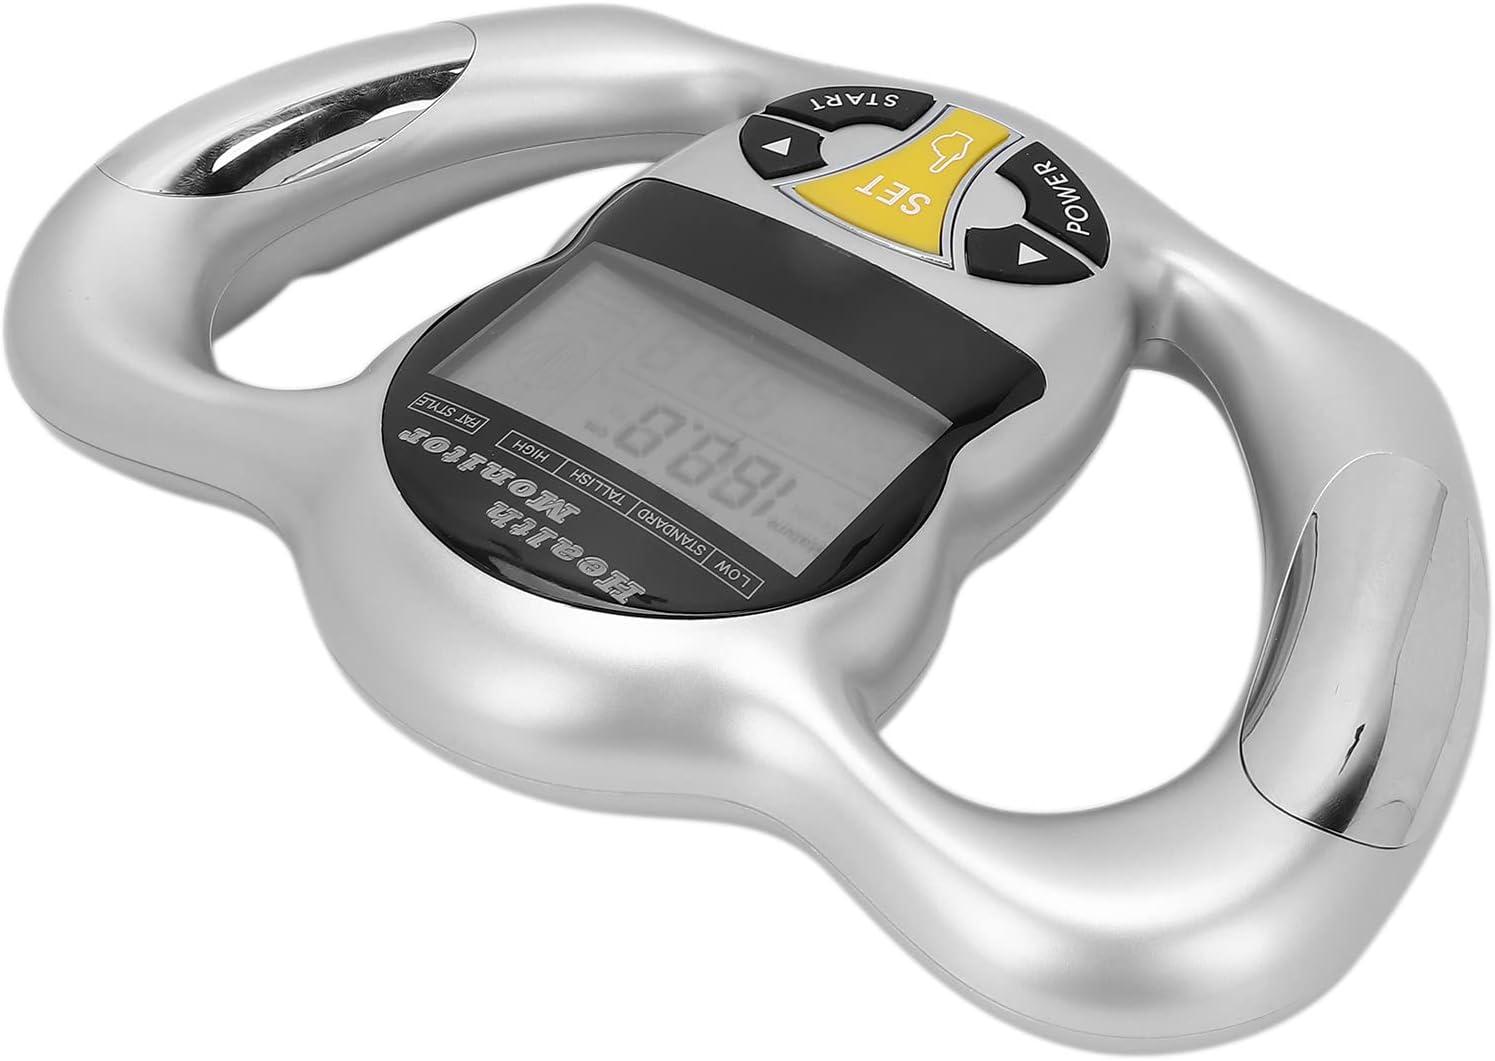 Qiilu Spptty Handheld Body Fat Measuring Instrument BMI Meter Fat Analyzer Monitor Measure Device,Body Fat Measuring Instrument,Fat Analyzer